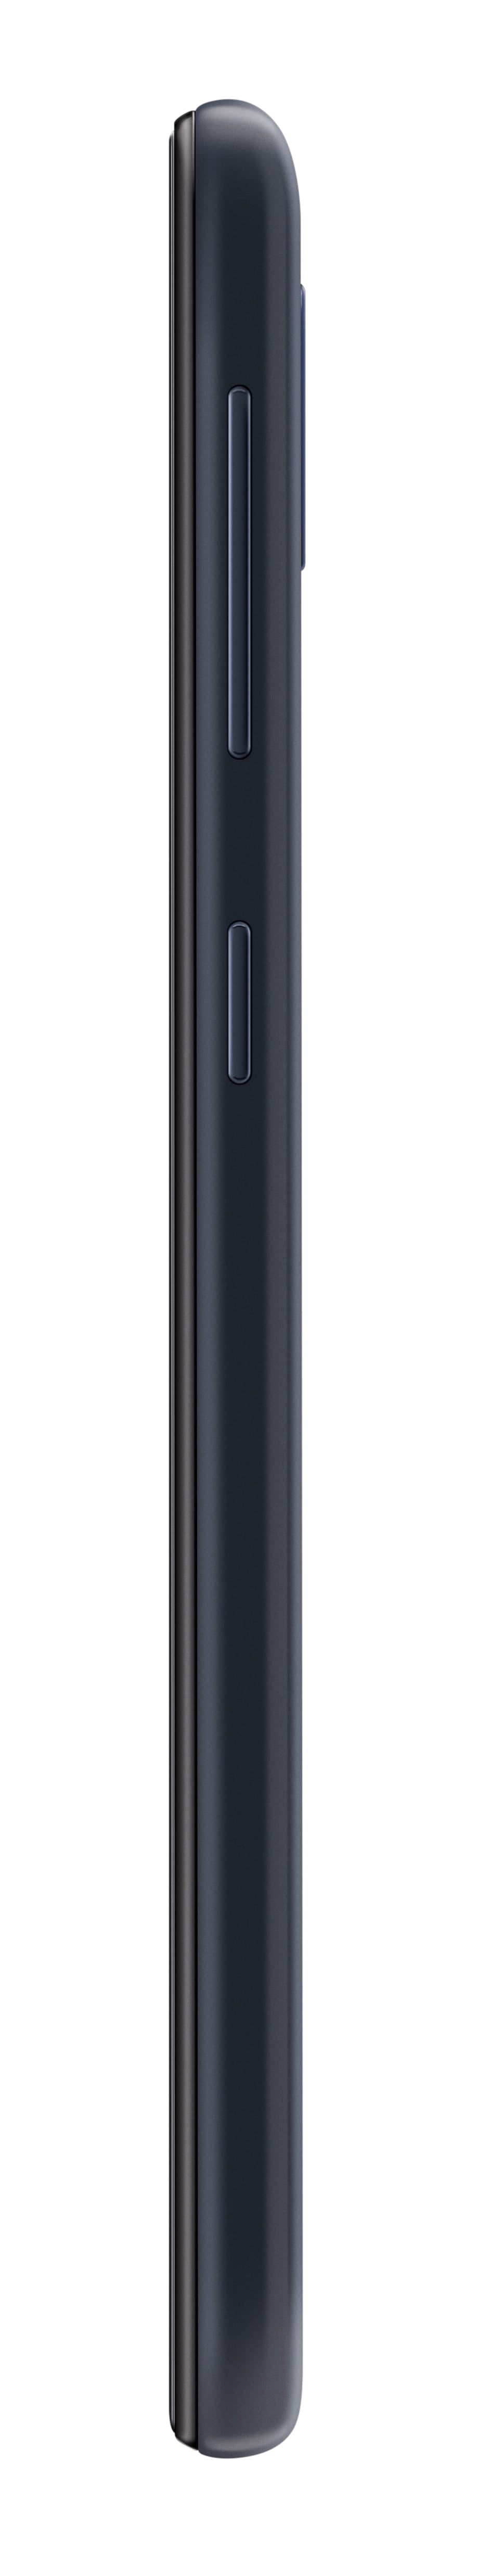 SAMSUNG Unlocked Galaxy A10e, 32GB Black - Smartphone - Walmart.com